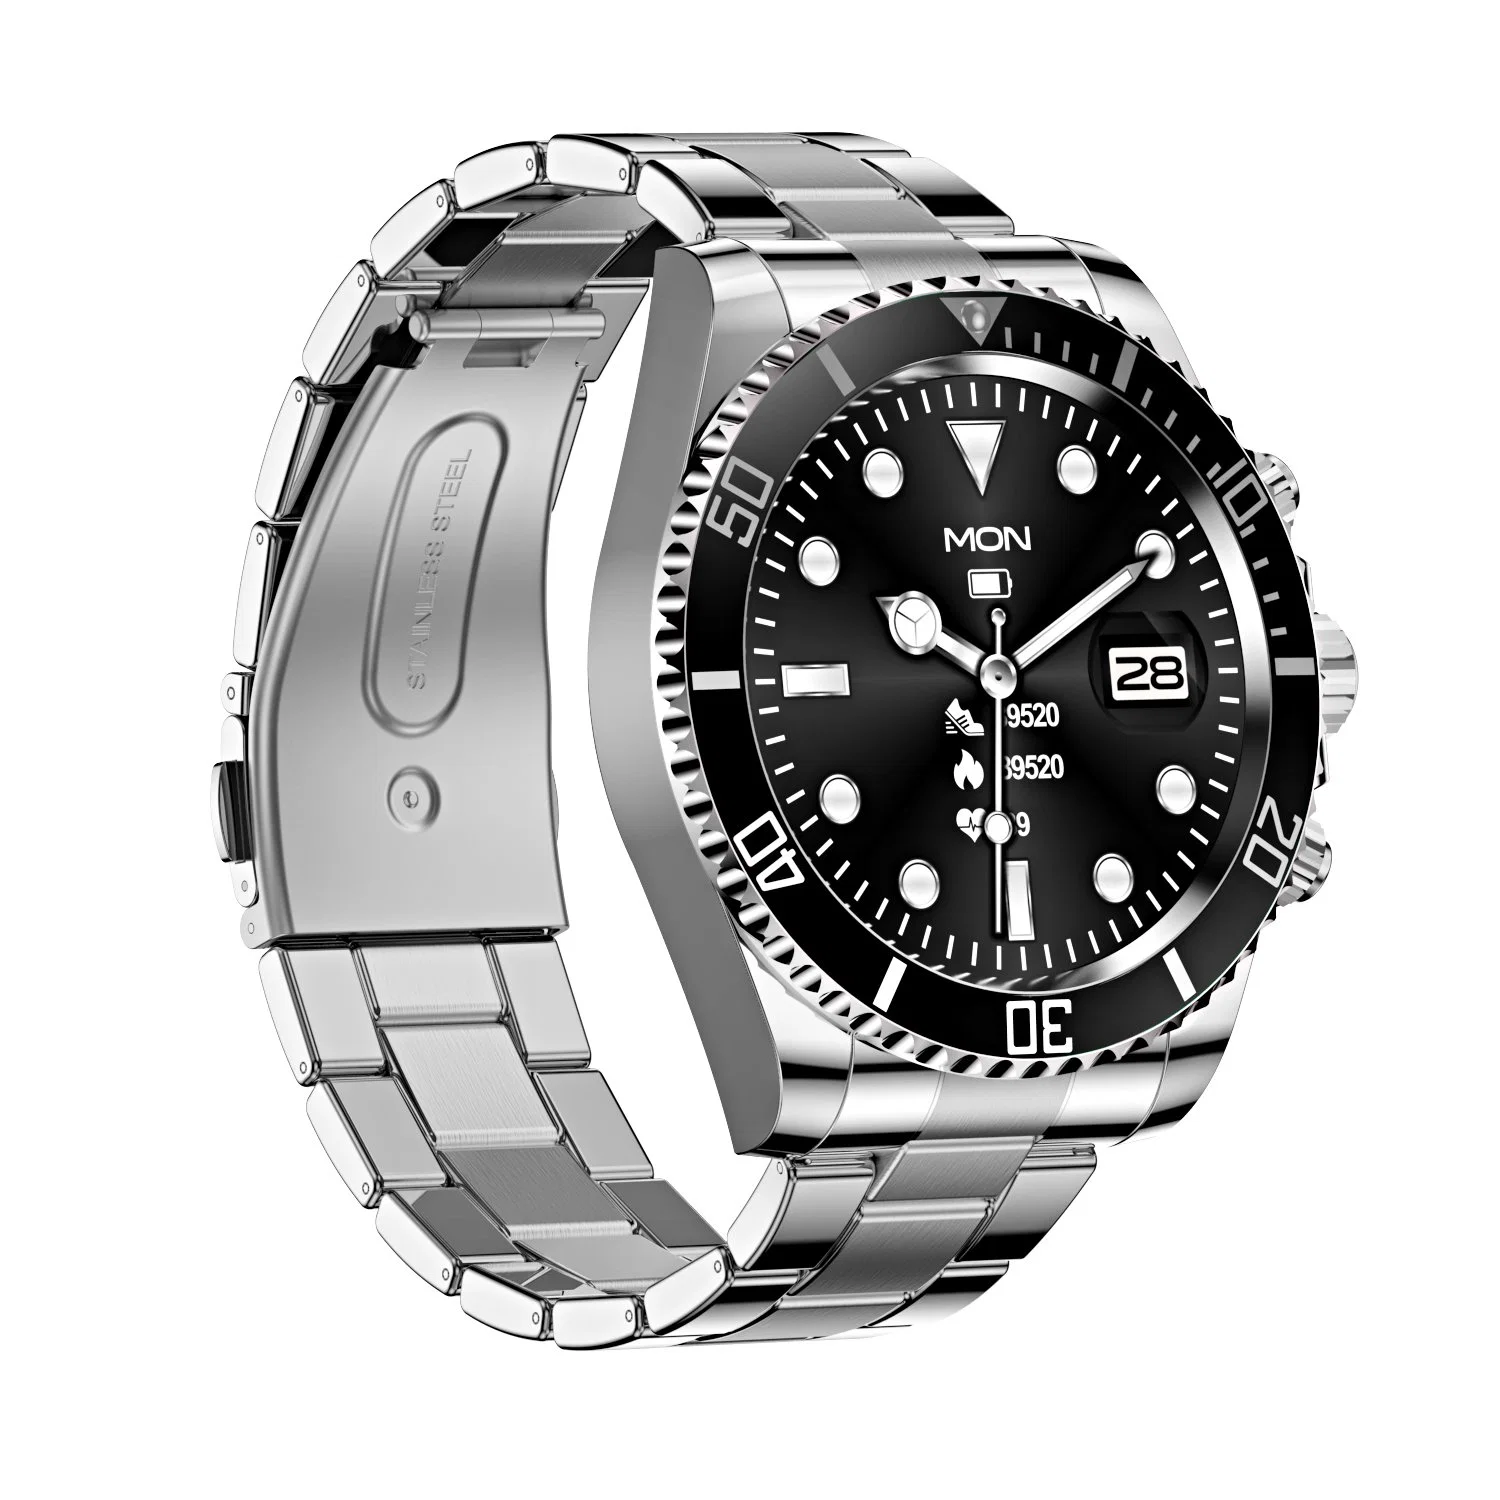 Nuevos relojes similares a Submariner Negro dial Acero inoxidable reloj Reloj automático para hombres para Aw12